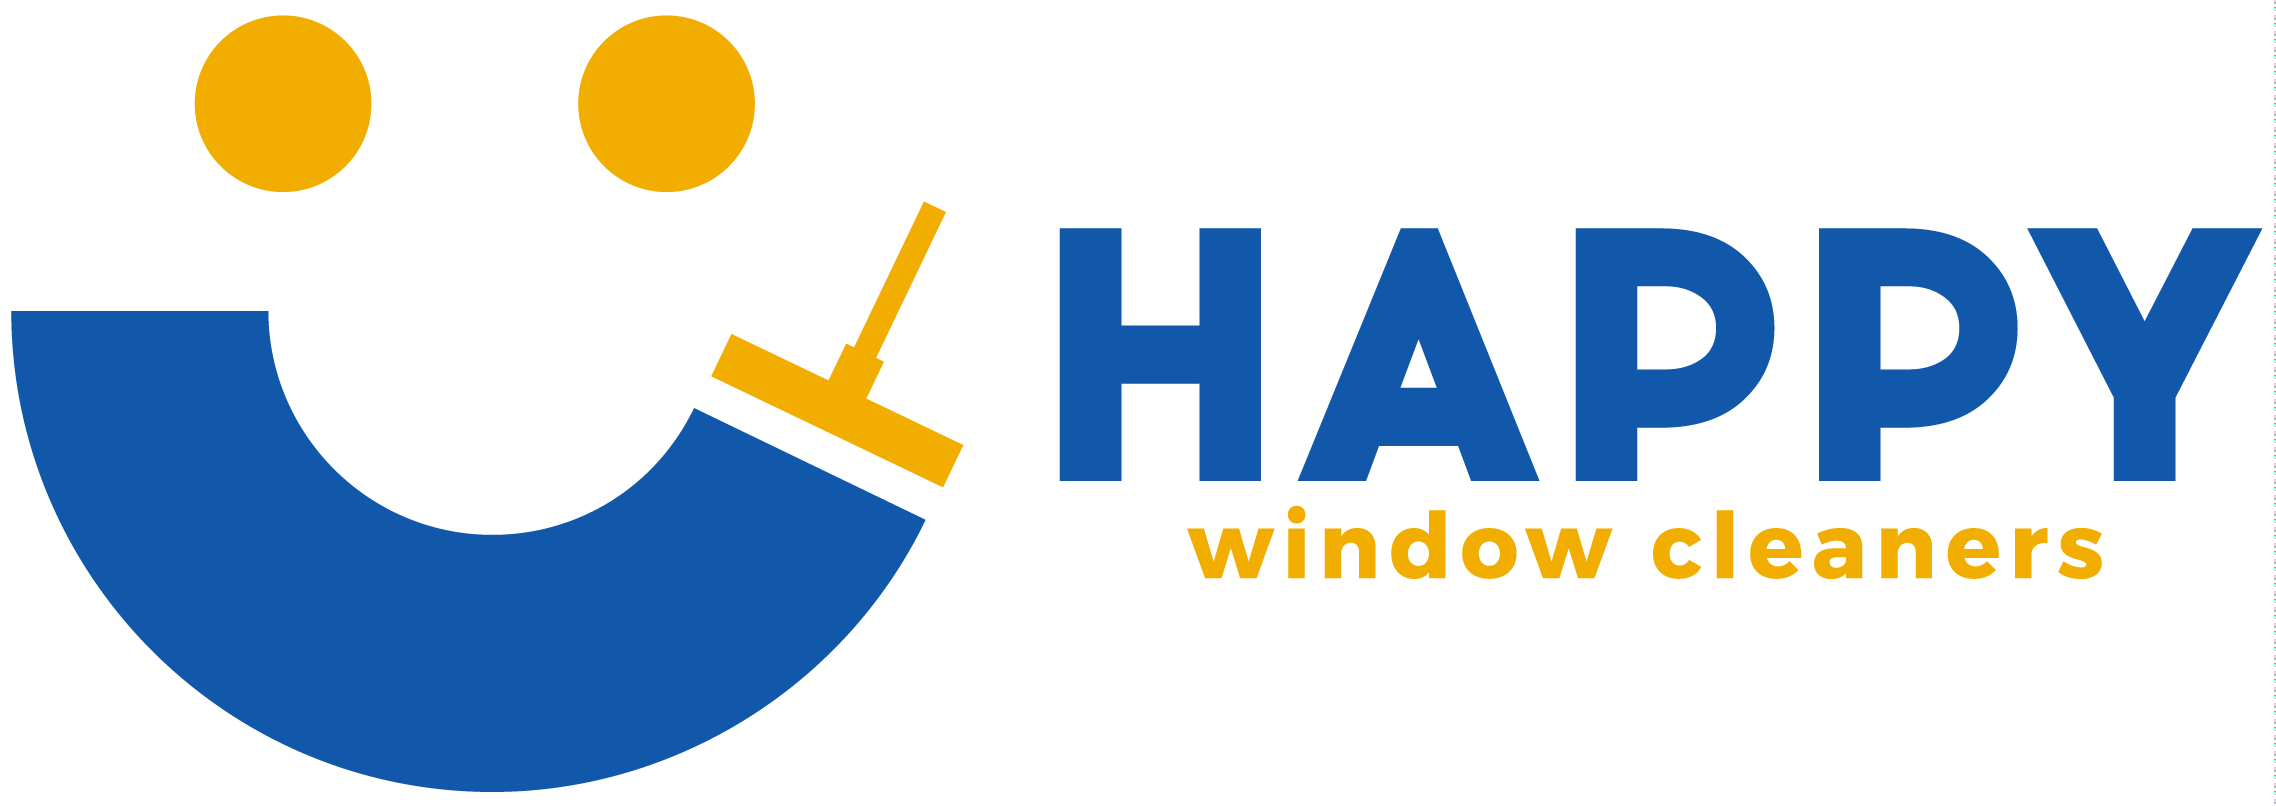 Window cleaning company Toronto - Happy Window Cleaner